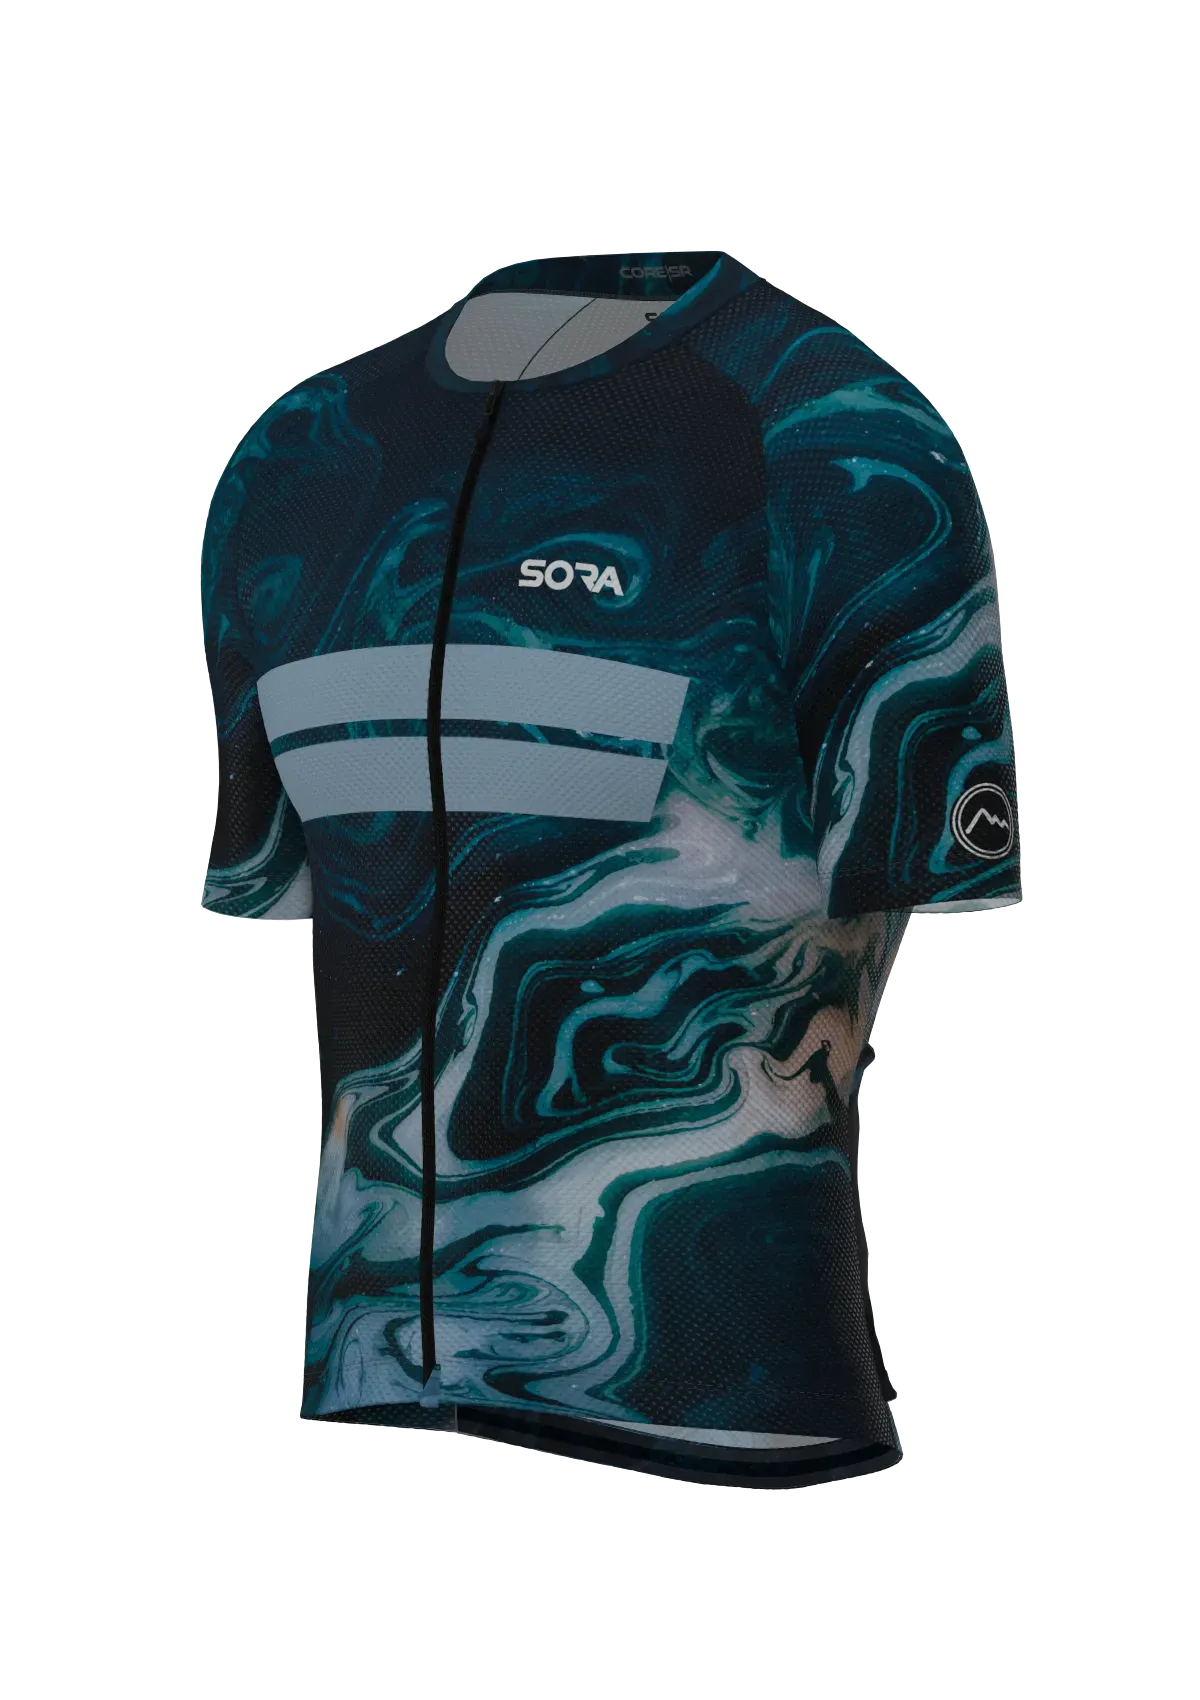 Aqua Climb Core cycling jersey